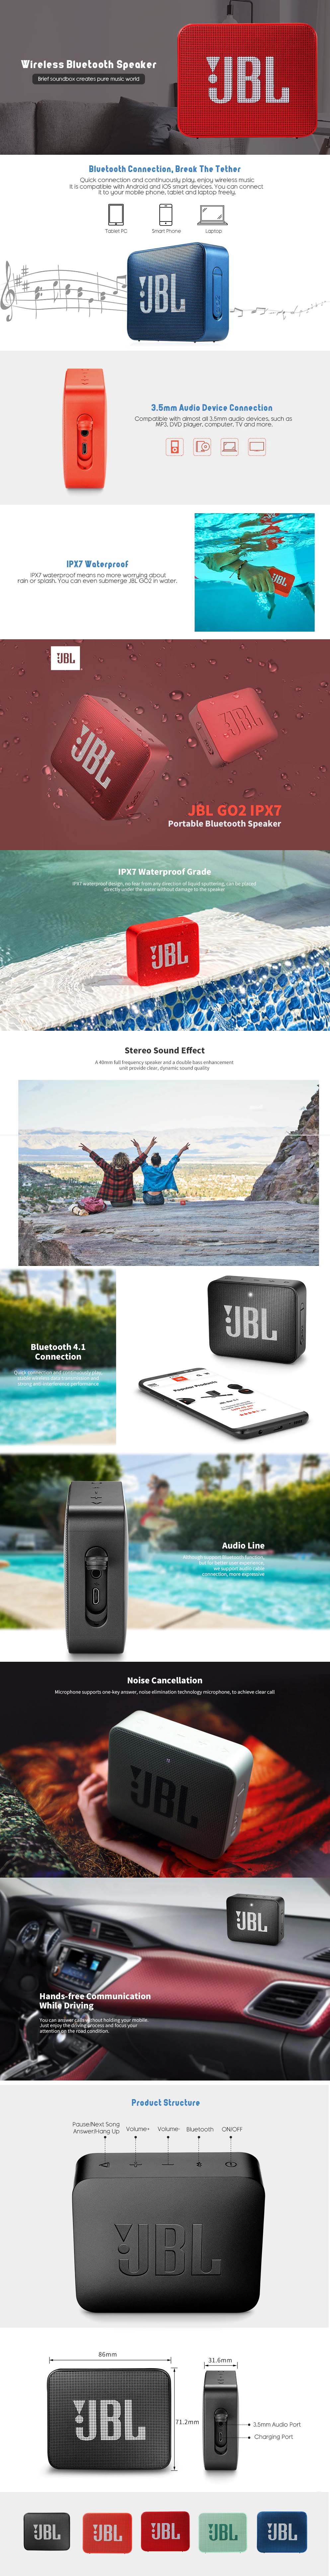 JBL GO2 Portable Bluetooth Speaker SOP